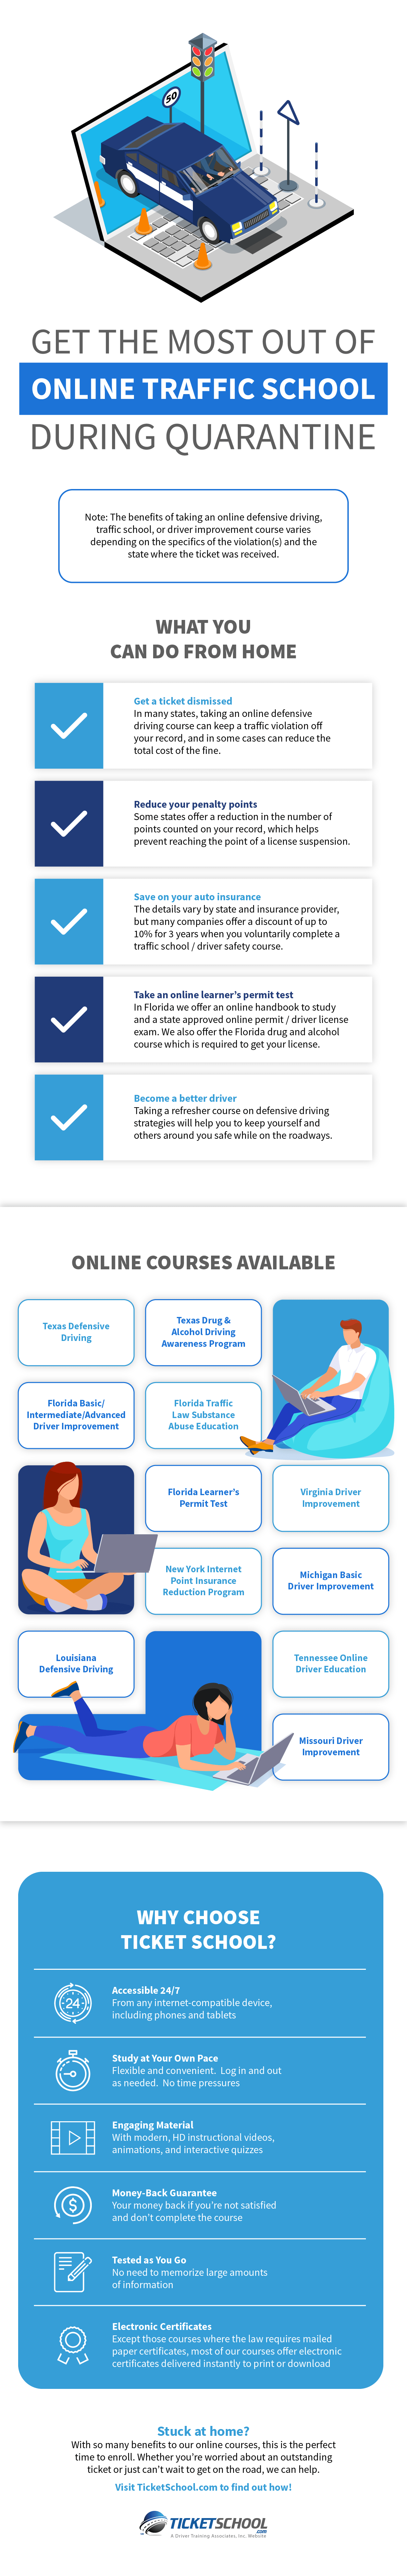 Online Traffic School During Quarantine Infographic